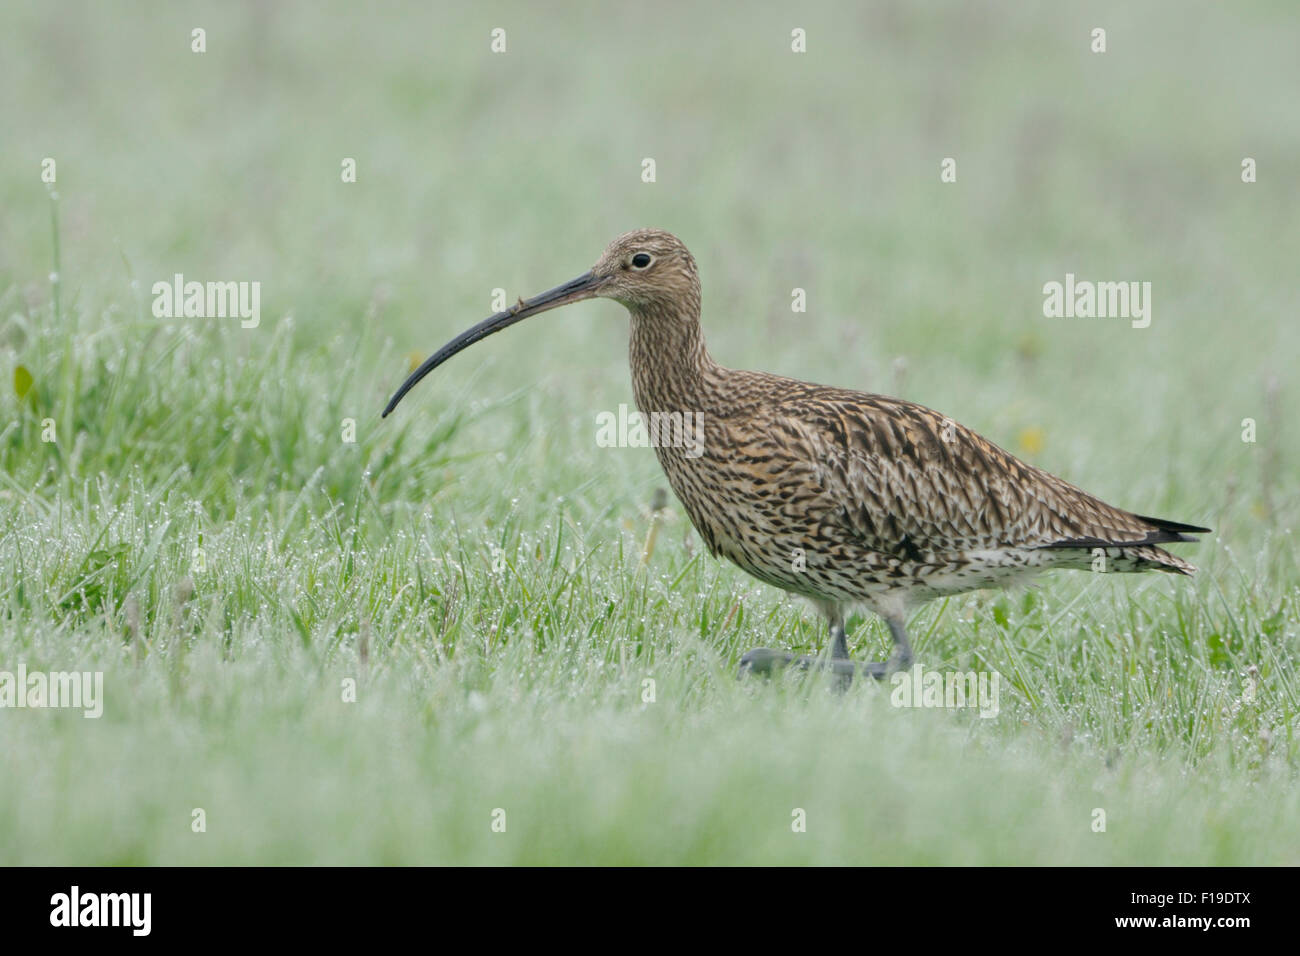 Raro Eurasian curlew / Grosser Brachvogel ( Numenius arquata ) a piedi attraverso la rugiada erba bagnata alla ricerca di cibo. Foto Stock